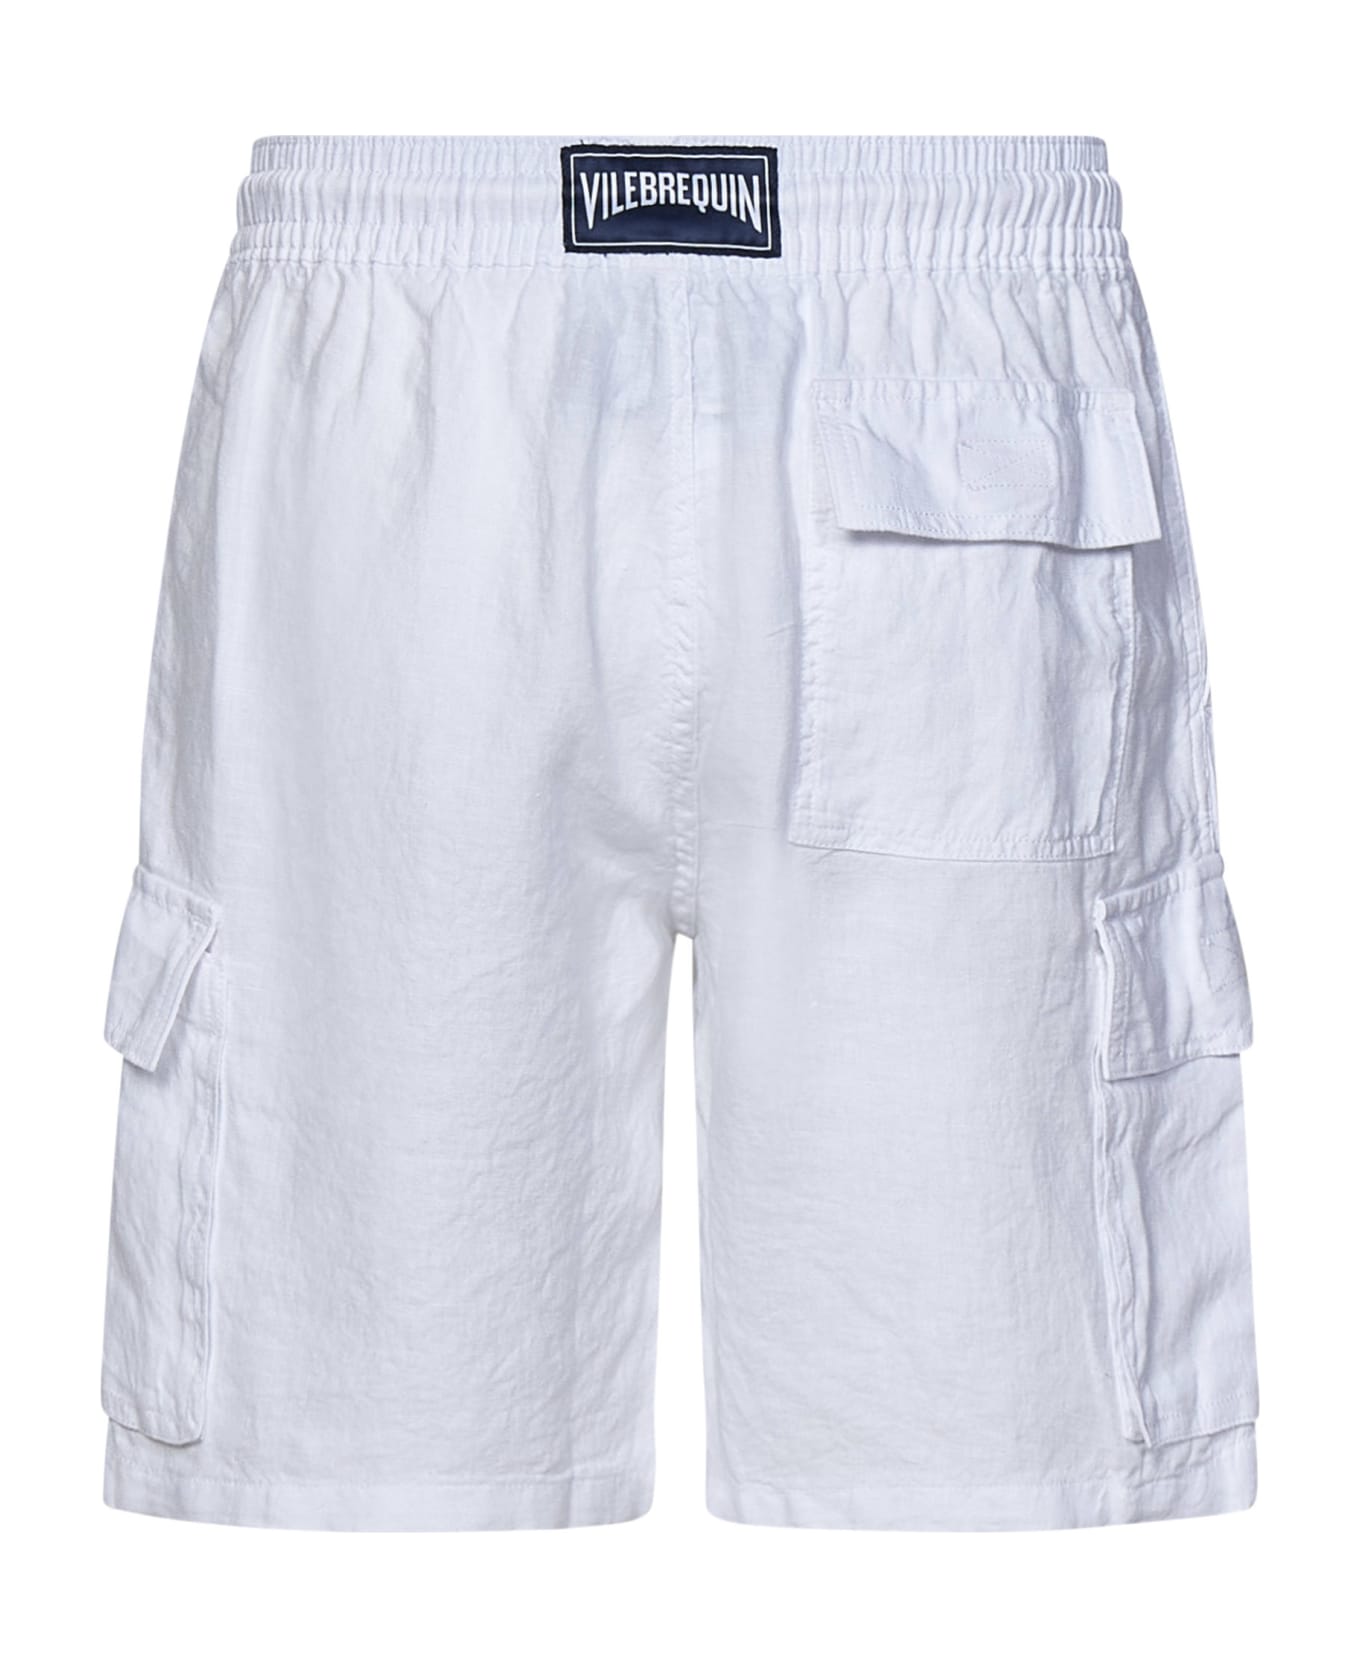 Vilebrequin Baie Shorts - White